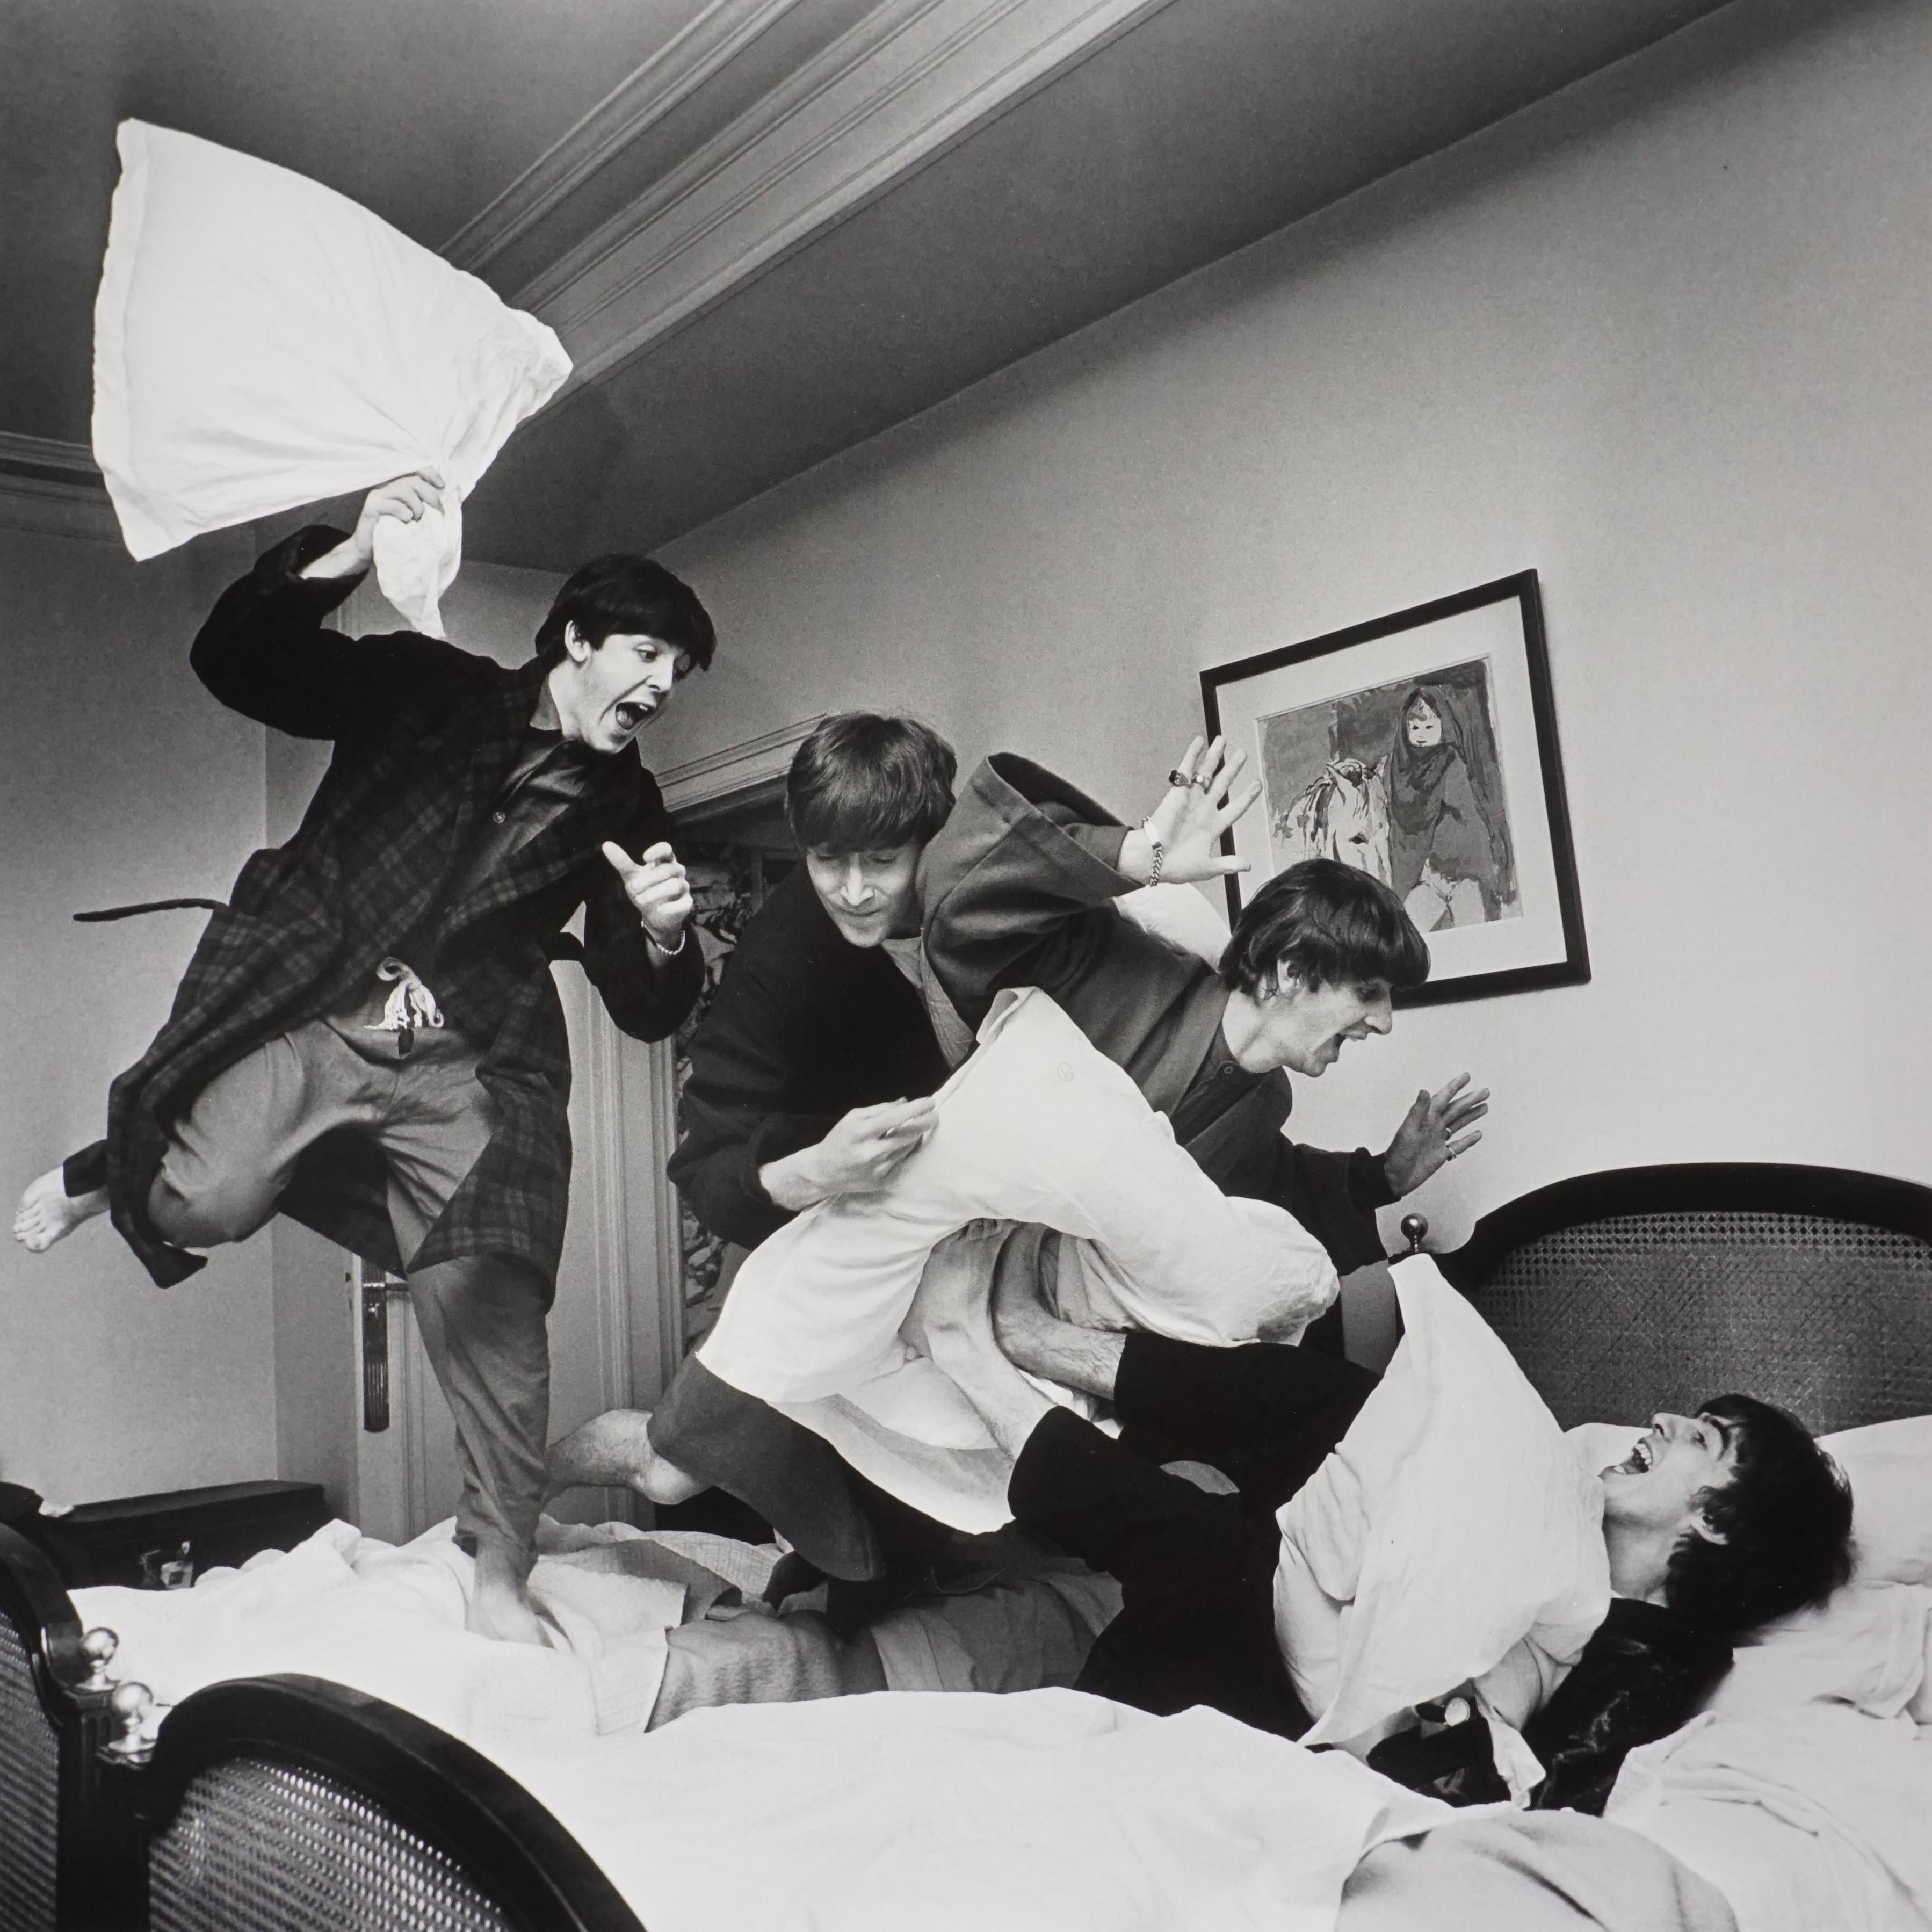 Harry Benson Black and White Photograph - Beatles Pillow Fight, Paris, 1964